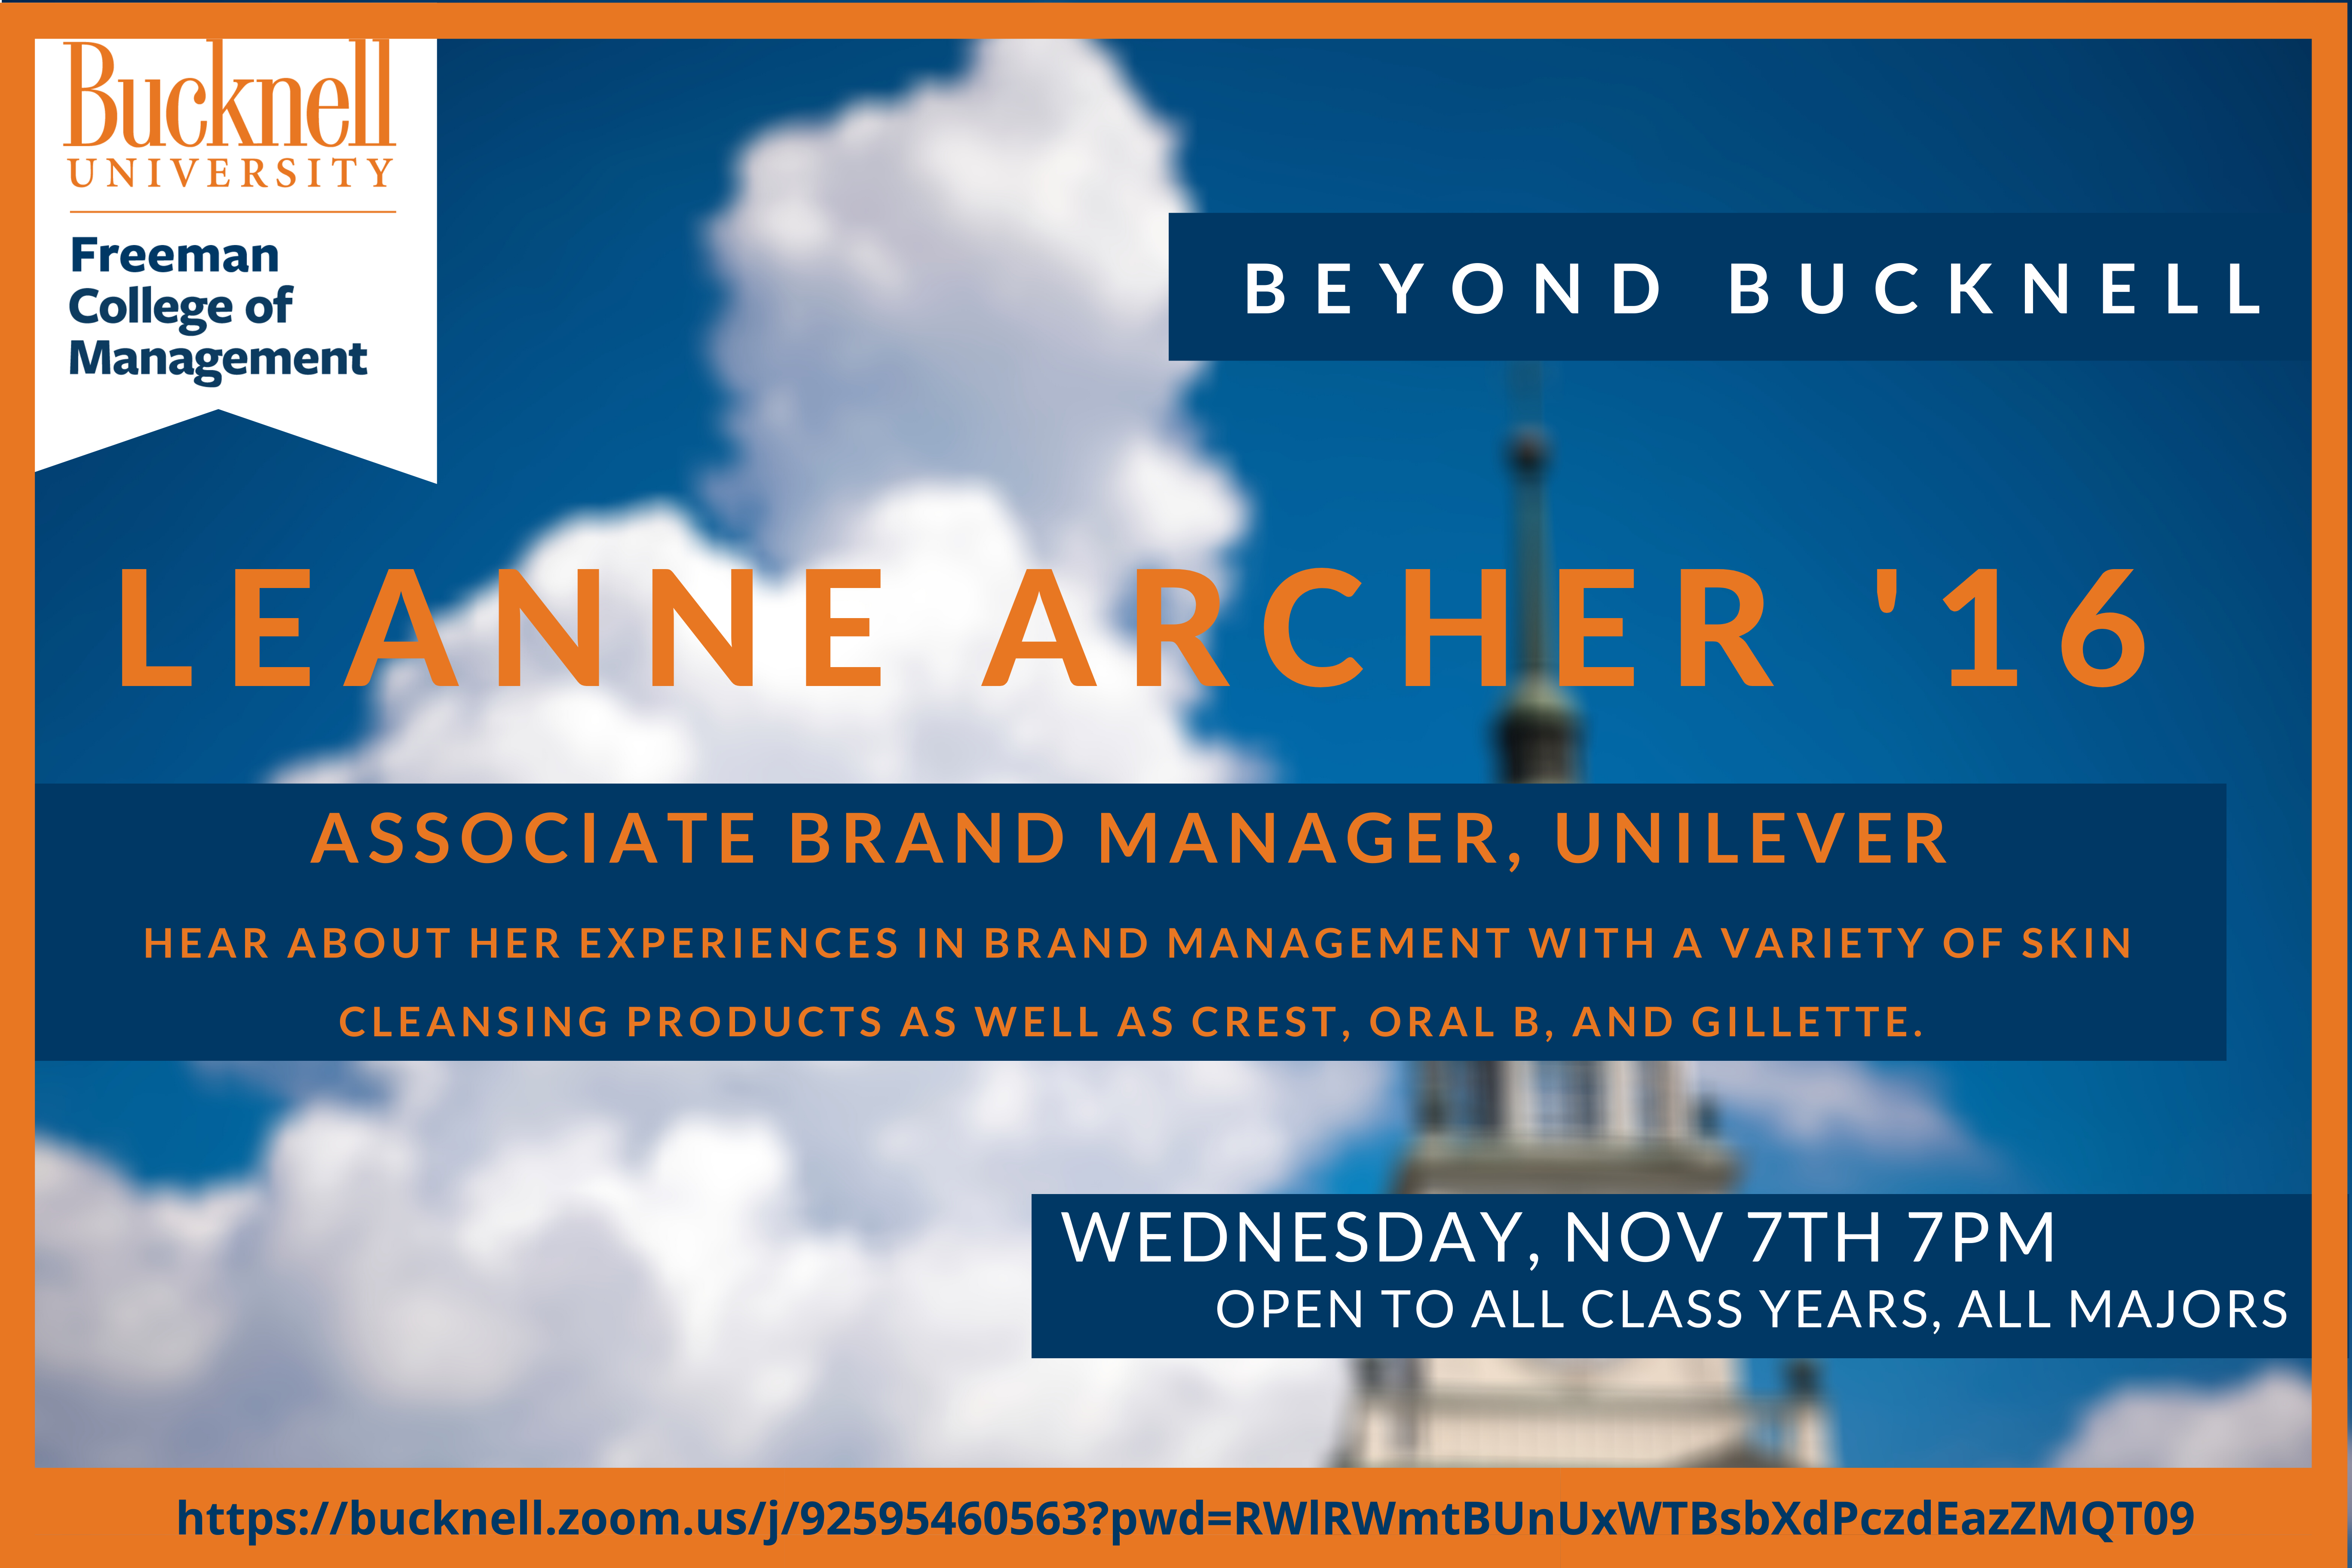 Beyond Bucknell Speaker Series welcomes Leanne Archer ’16, Associate Brand Manager for Unilever